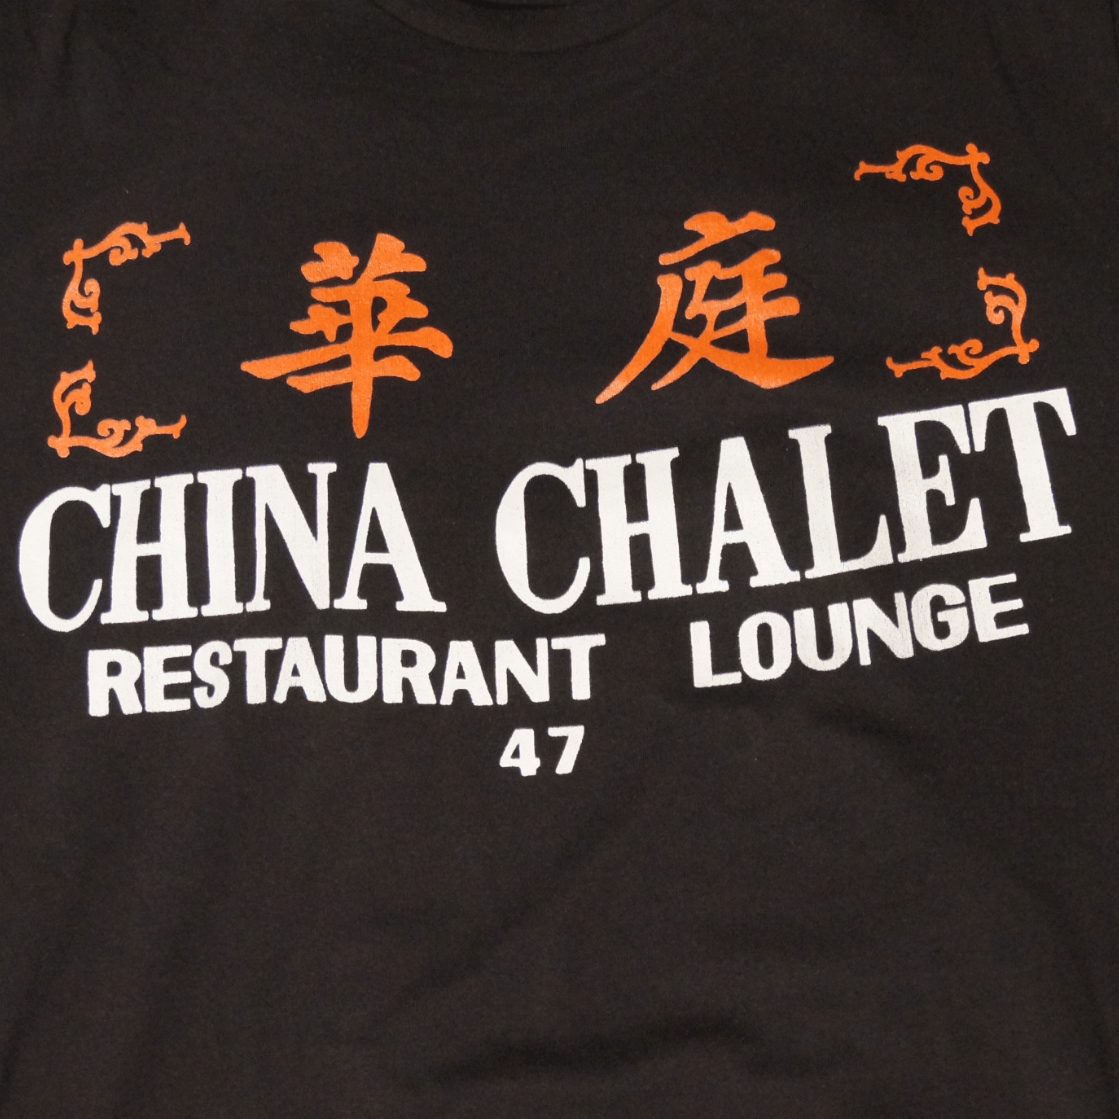 Let's Smoke Cigarettes at China Chalet T-Shirt - NYC Dim Sum Restaurant | OlIO Music & Arts